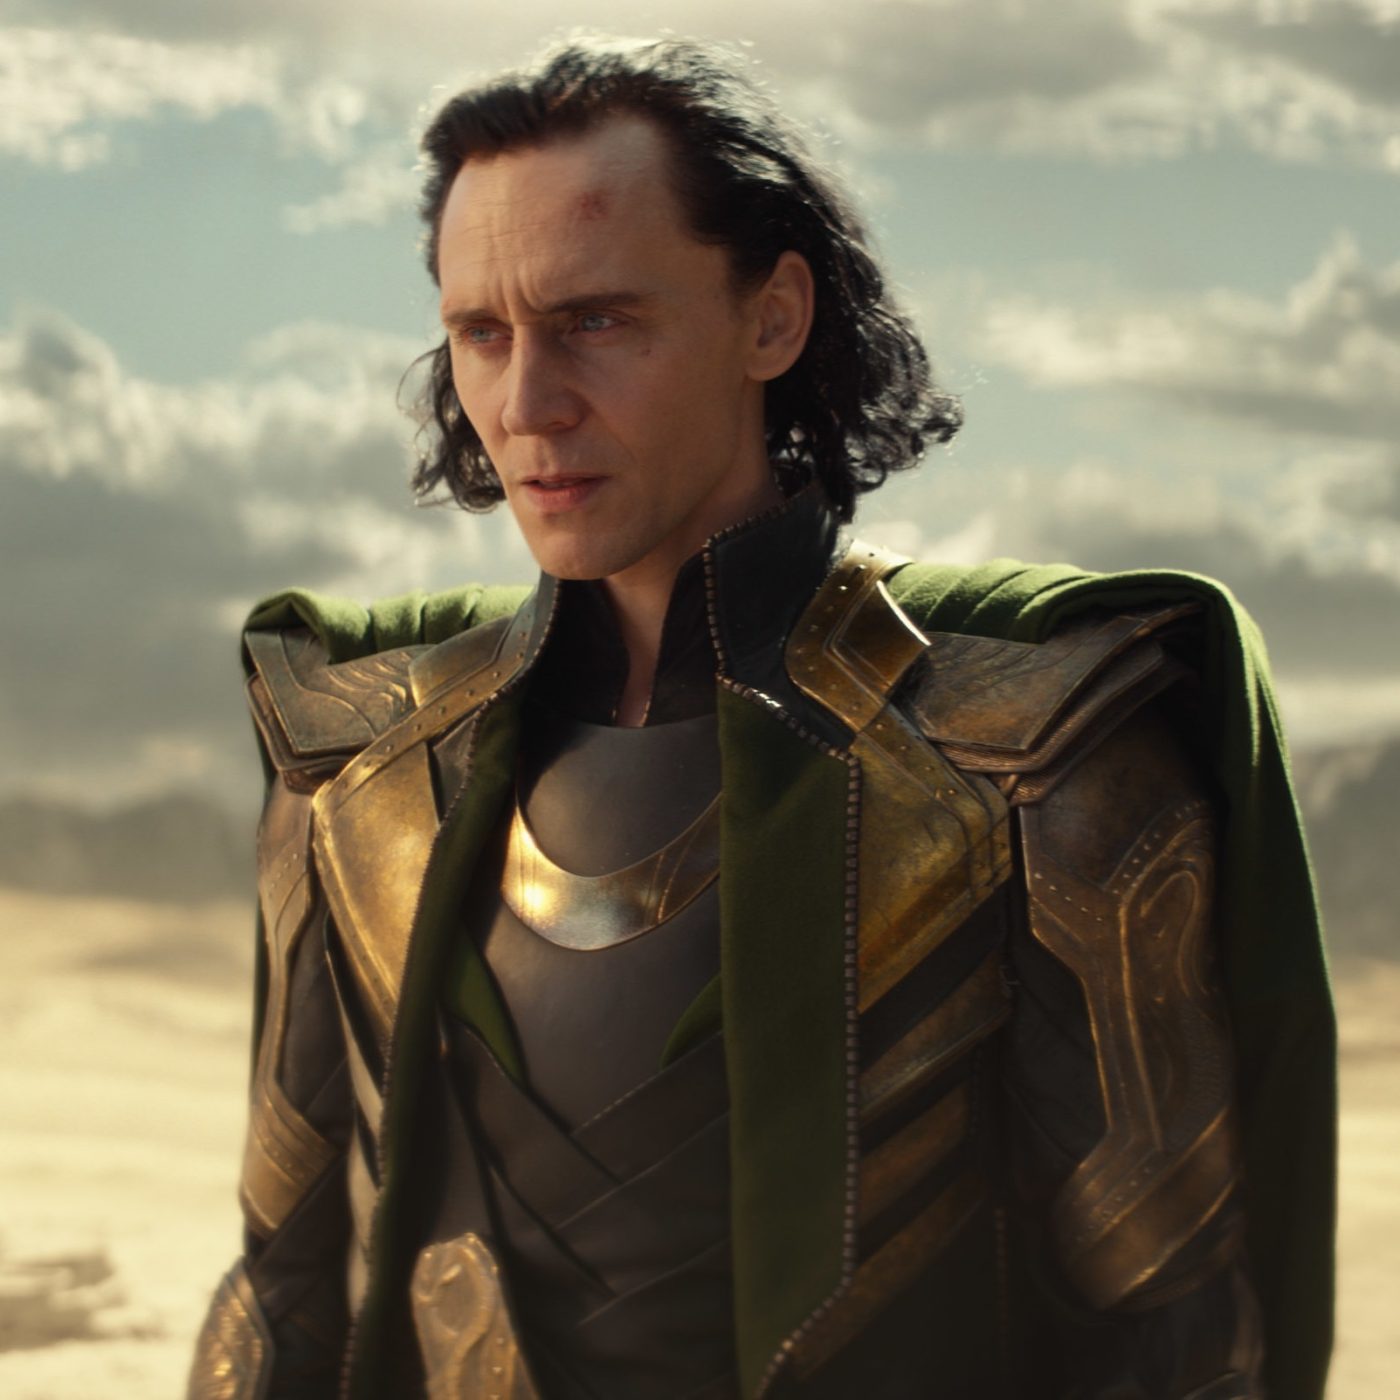 Ant-Man 3 Includes Tom Hiddleston's Loki in New Marketing (Photos)